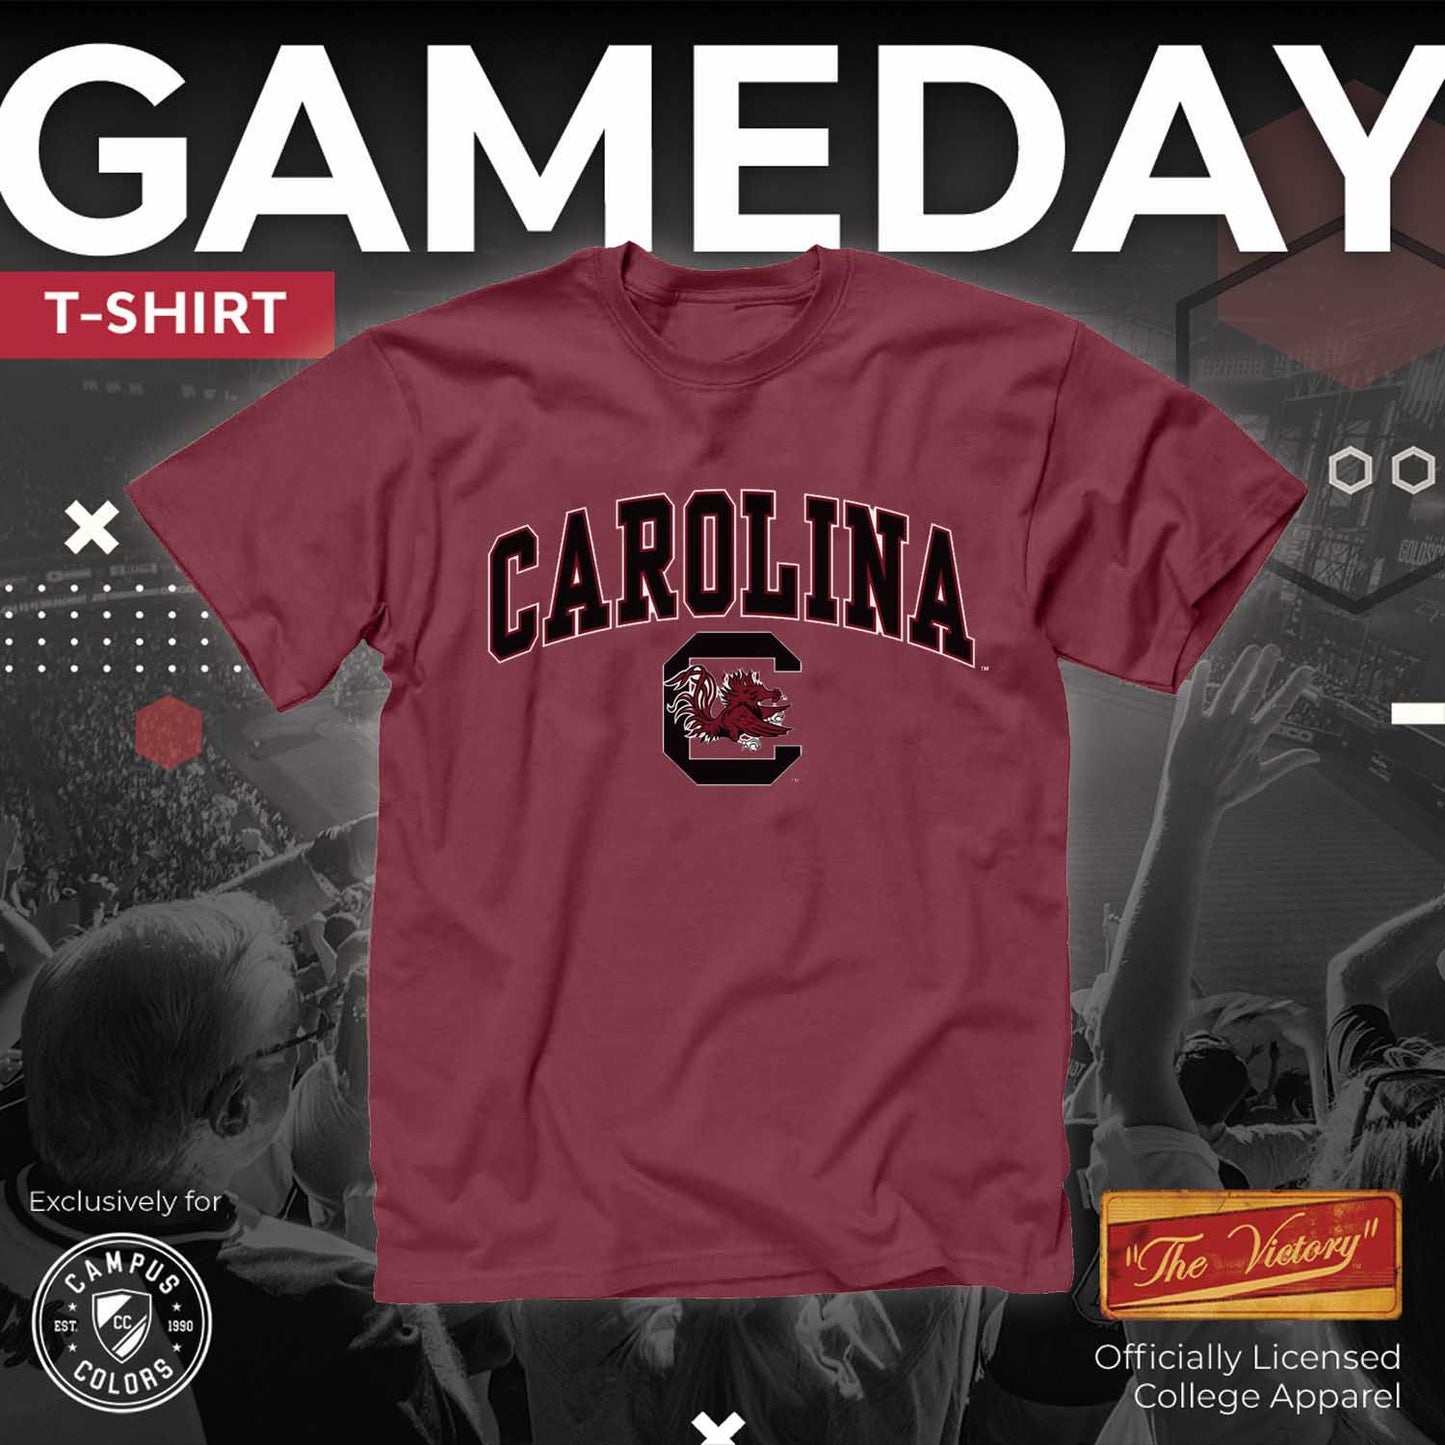 South Carolina Gamecocks NCAA Adult Gameday Cotton T-Shirt - Maroon